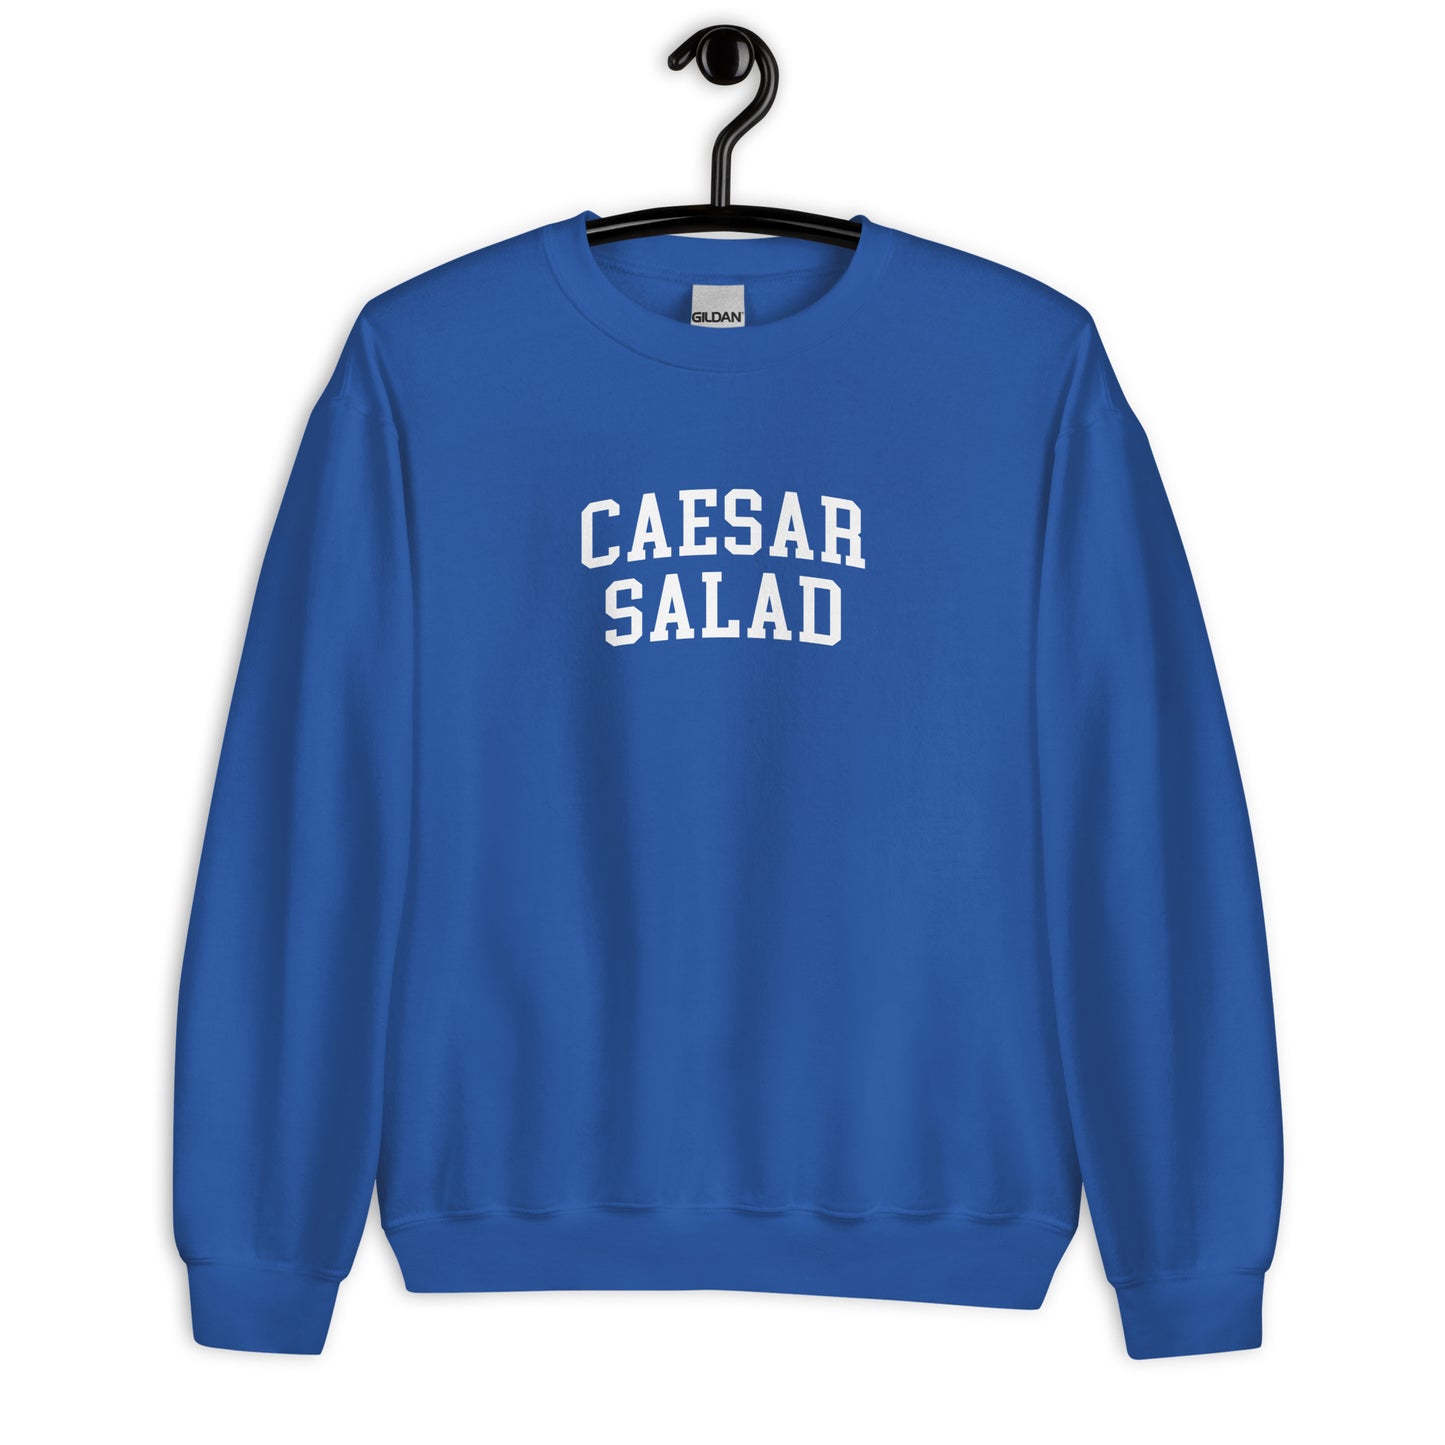 Caesar Salad Sweatshirt - Arched Font